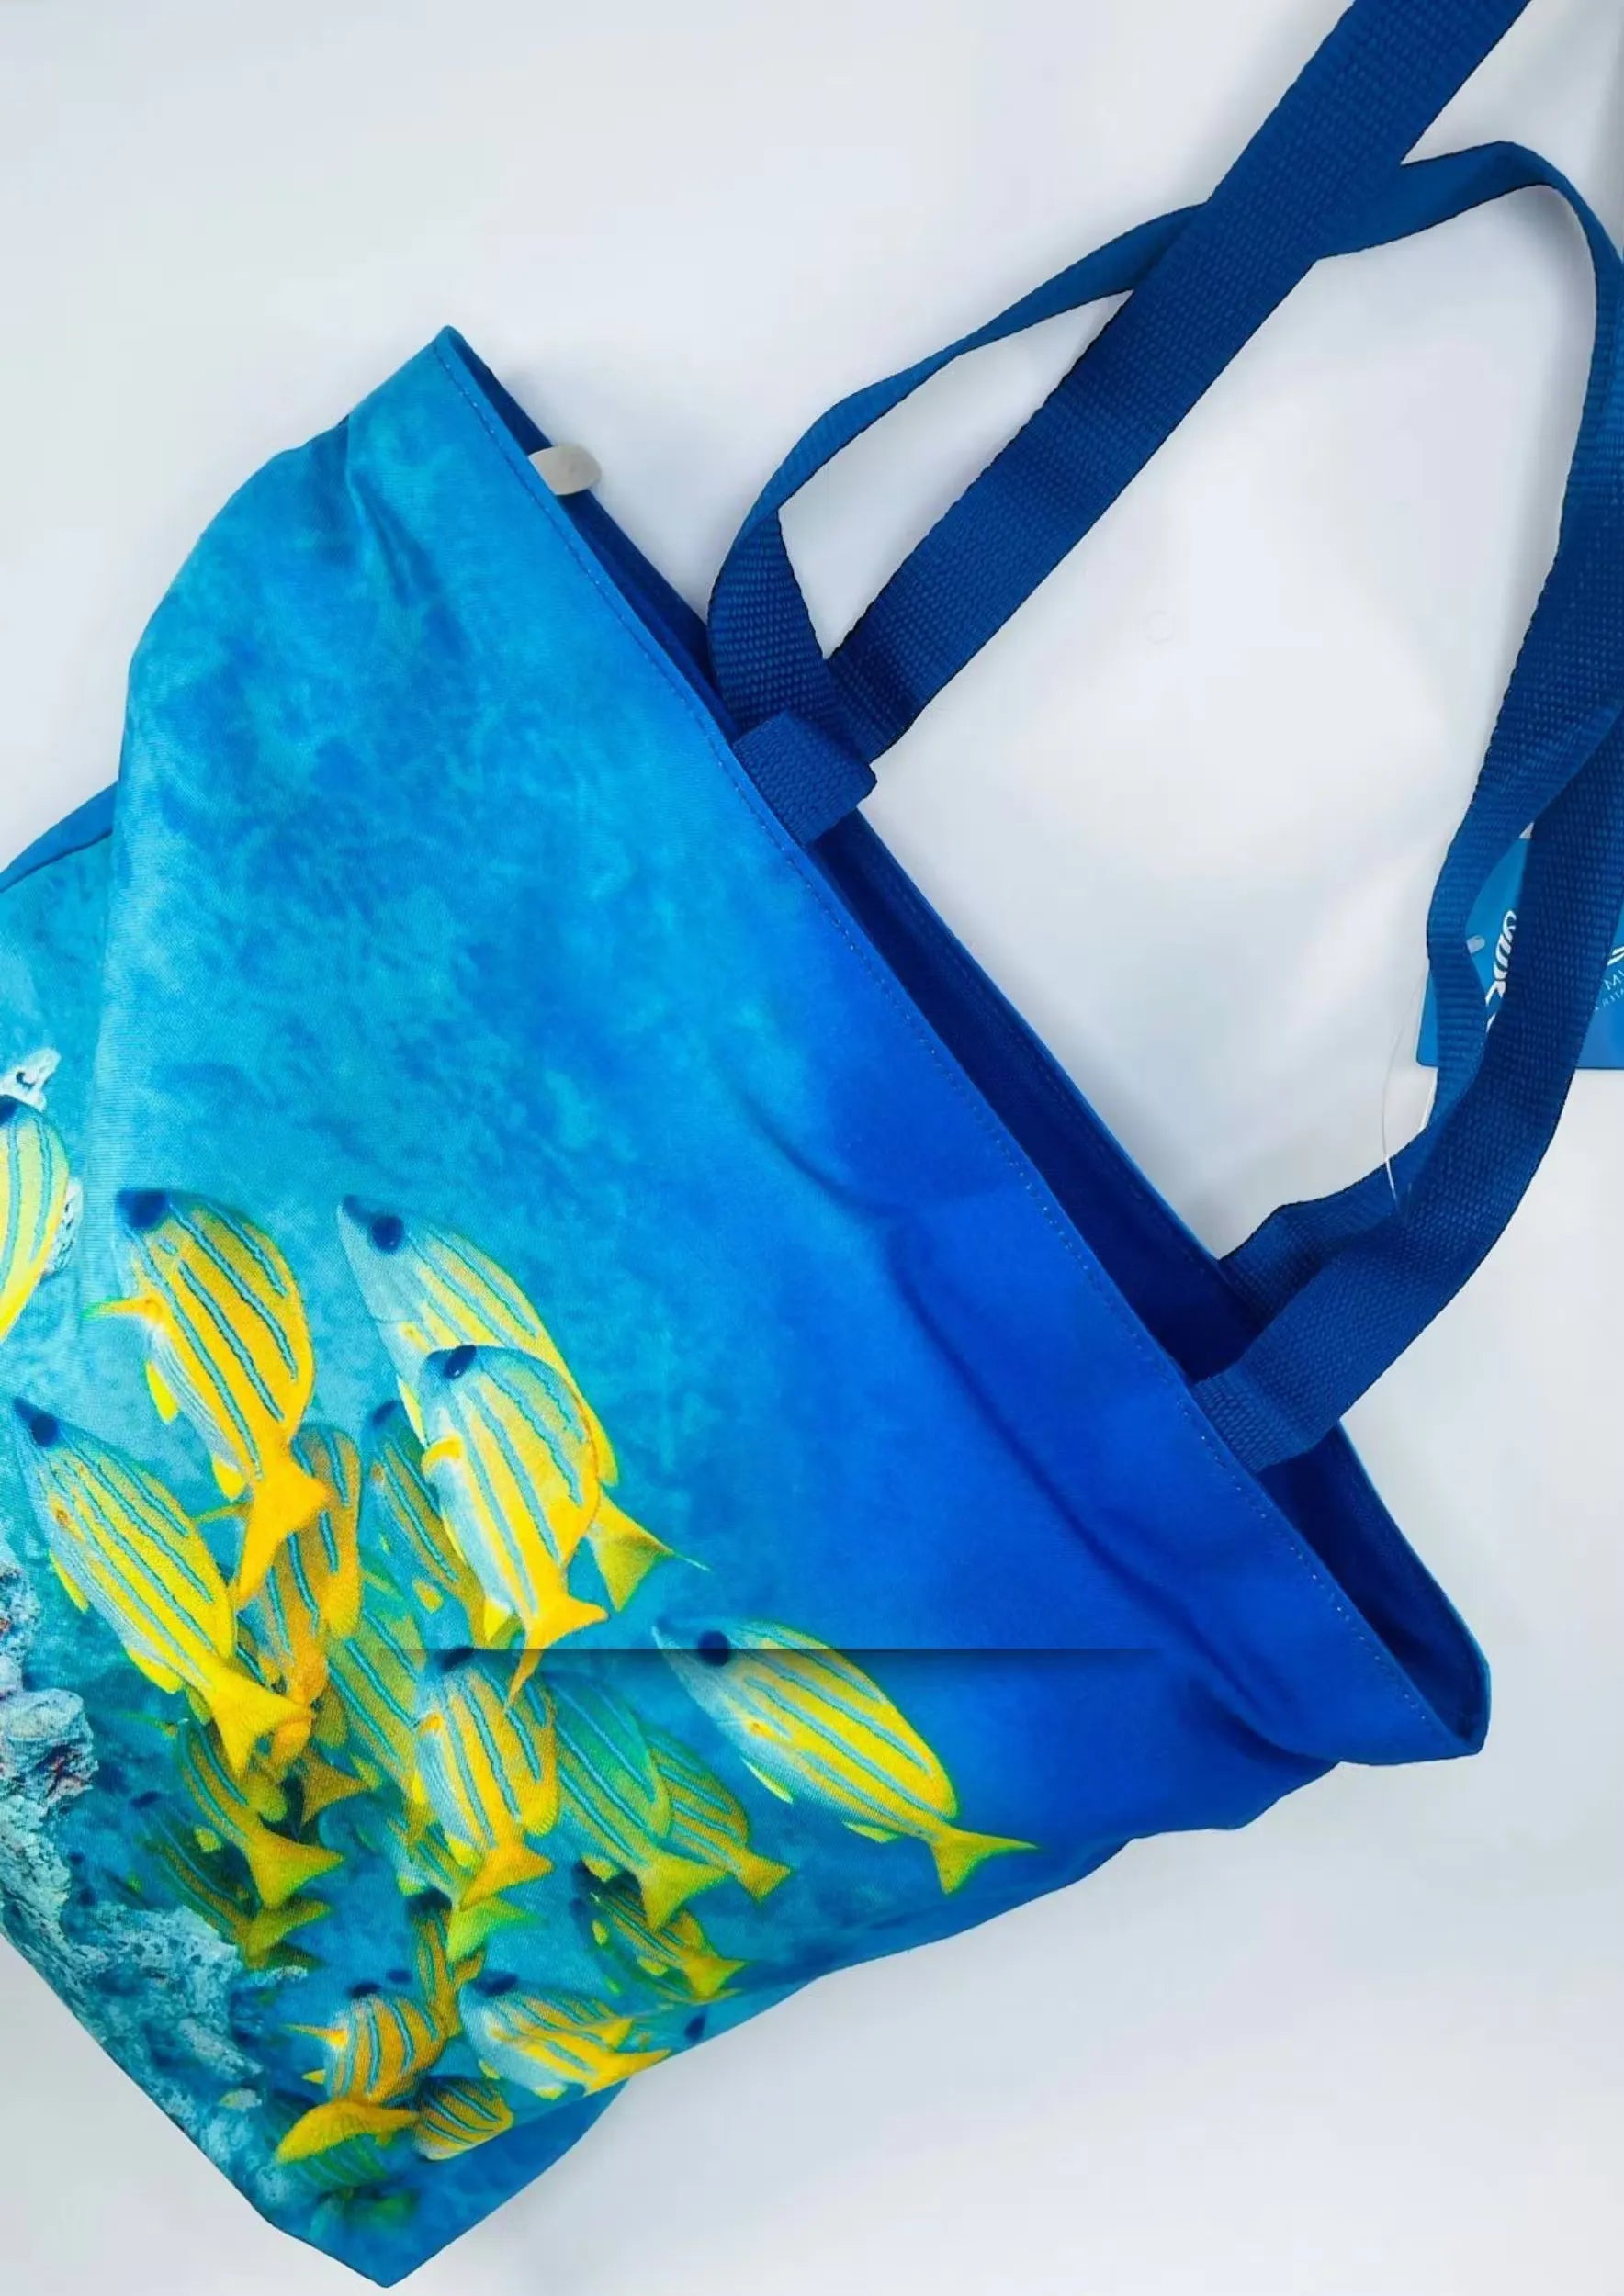 Dubai Aquarium Tote Bag: Blue and white tote bag featuring colorful fish and coral reef design.